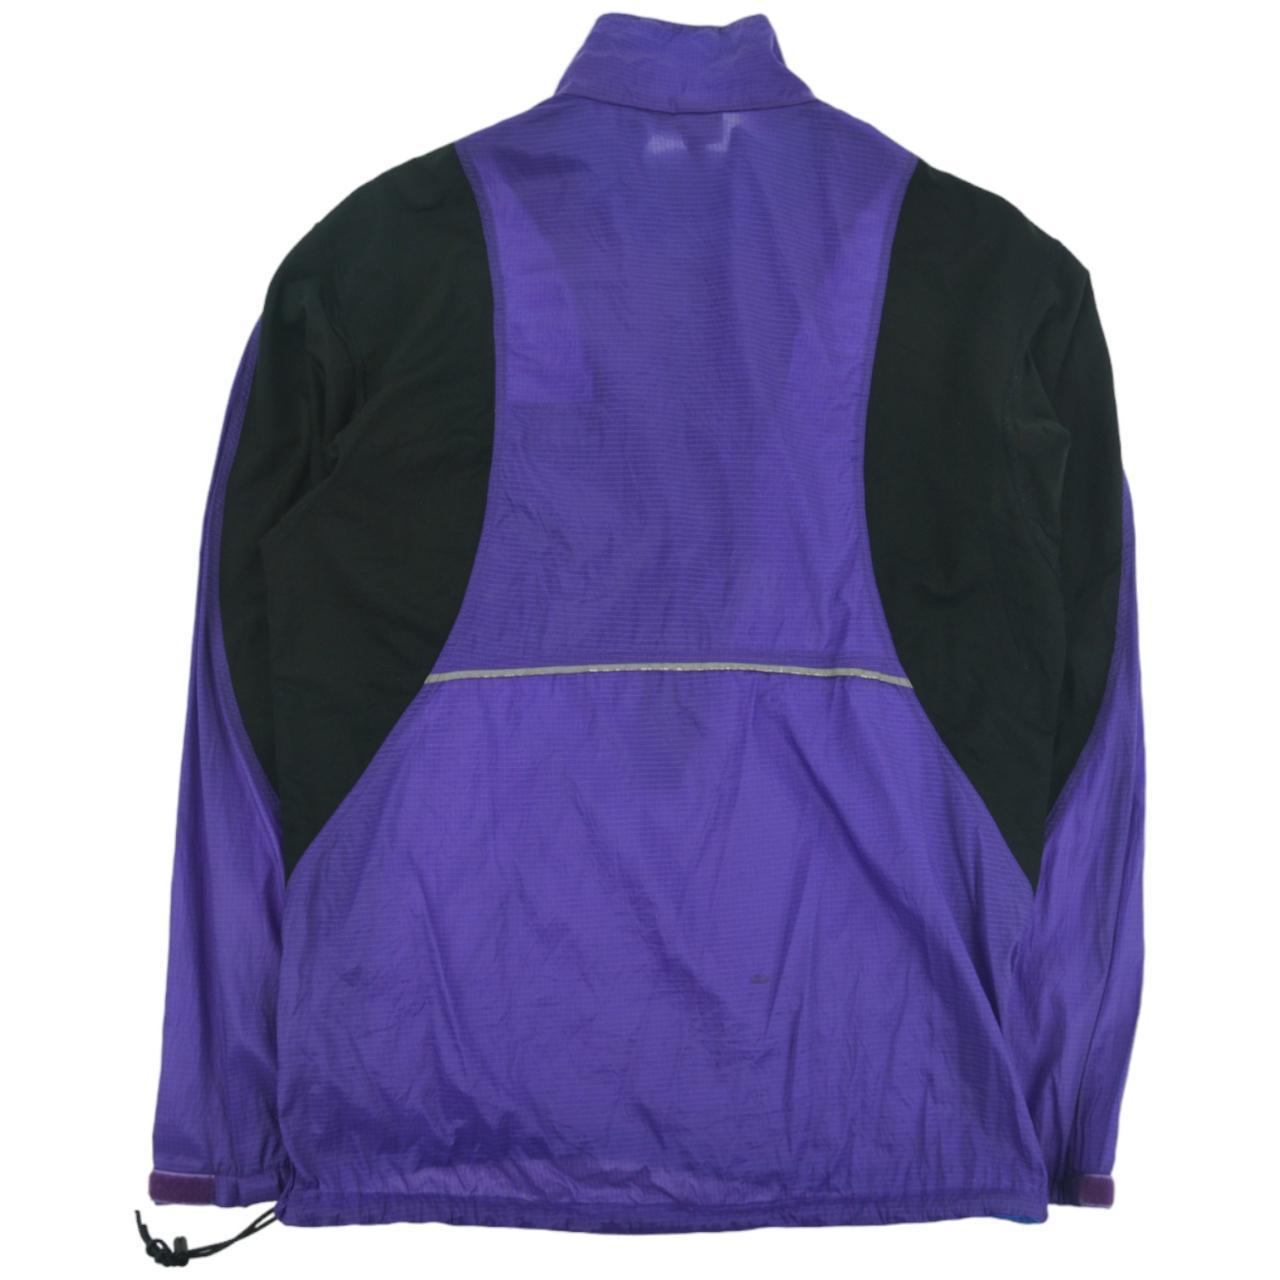 Vintage Patagonia Grid Jacket Size M - Known Source